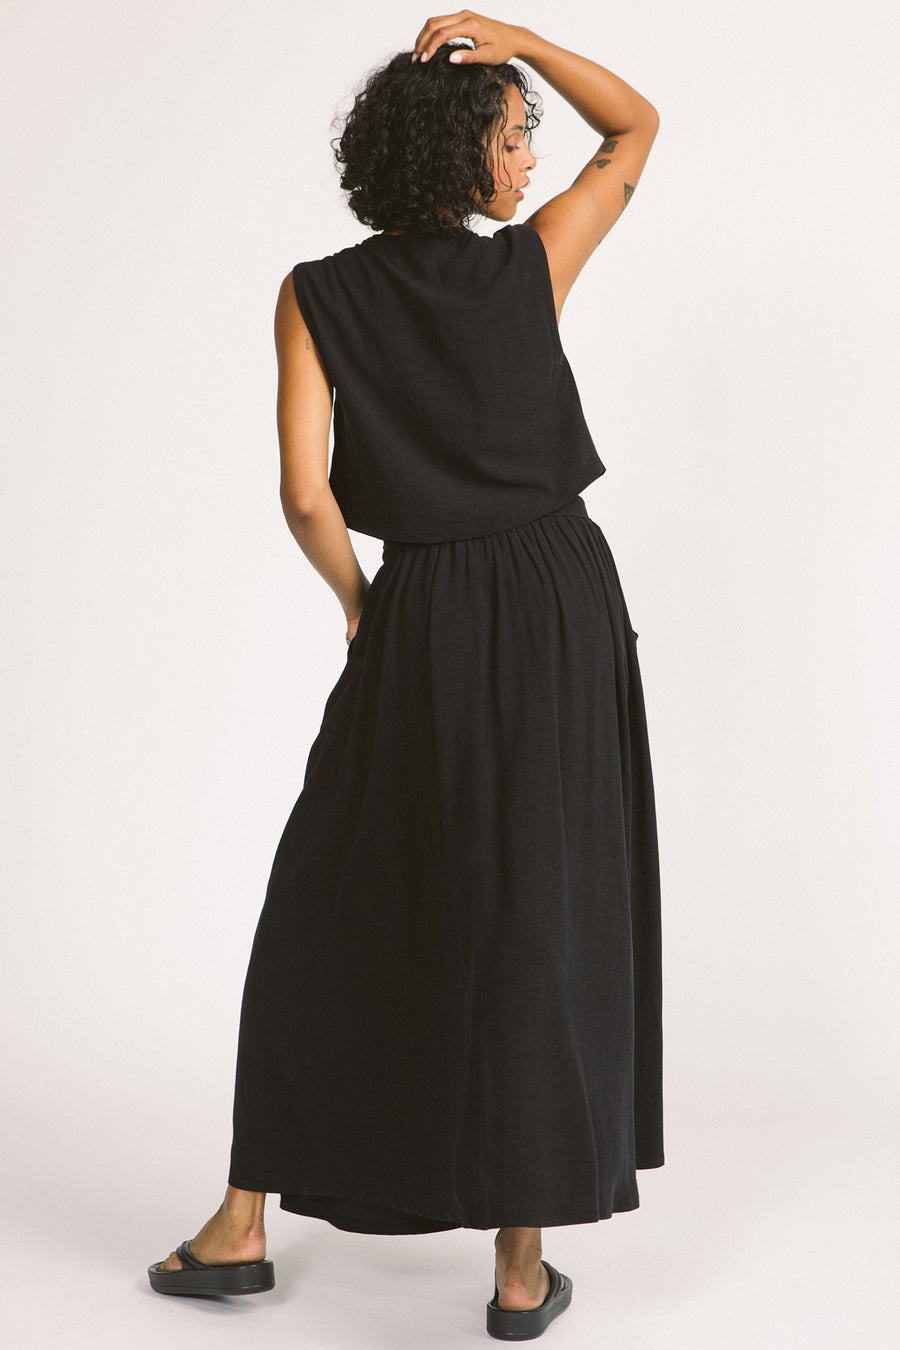 Back view of woman wearing black Oriana maxi skirt by Allison Wonderland. 